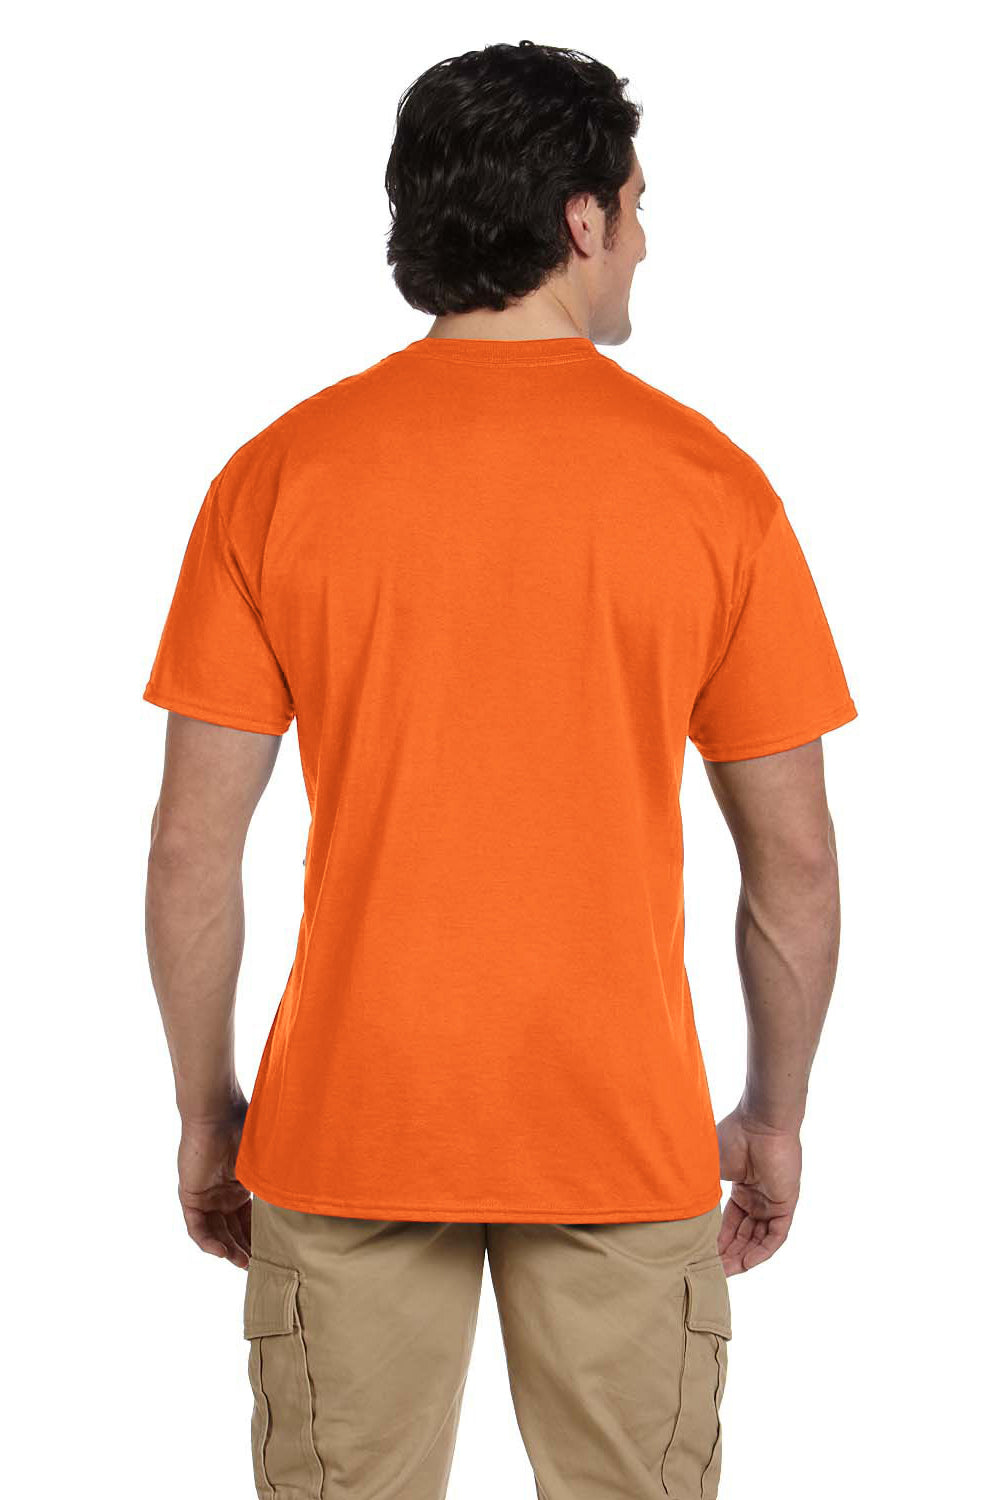 Gildan G830 Mens DryBlend Moisture Wicking Short Sleeve Crewneck T-Shirt w/ Pocket Safety Orange Back